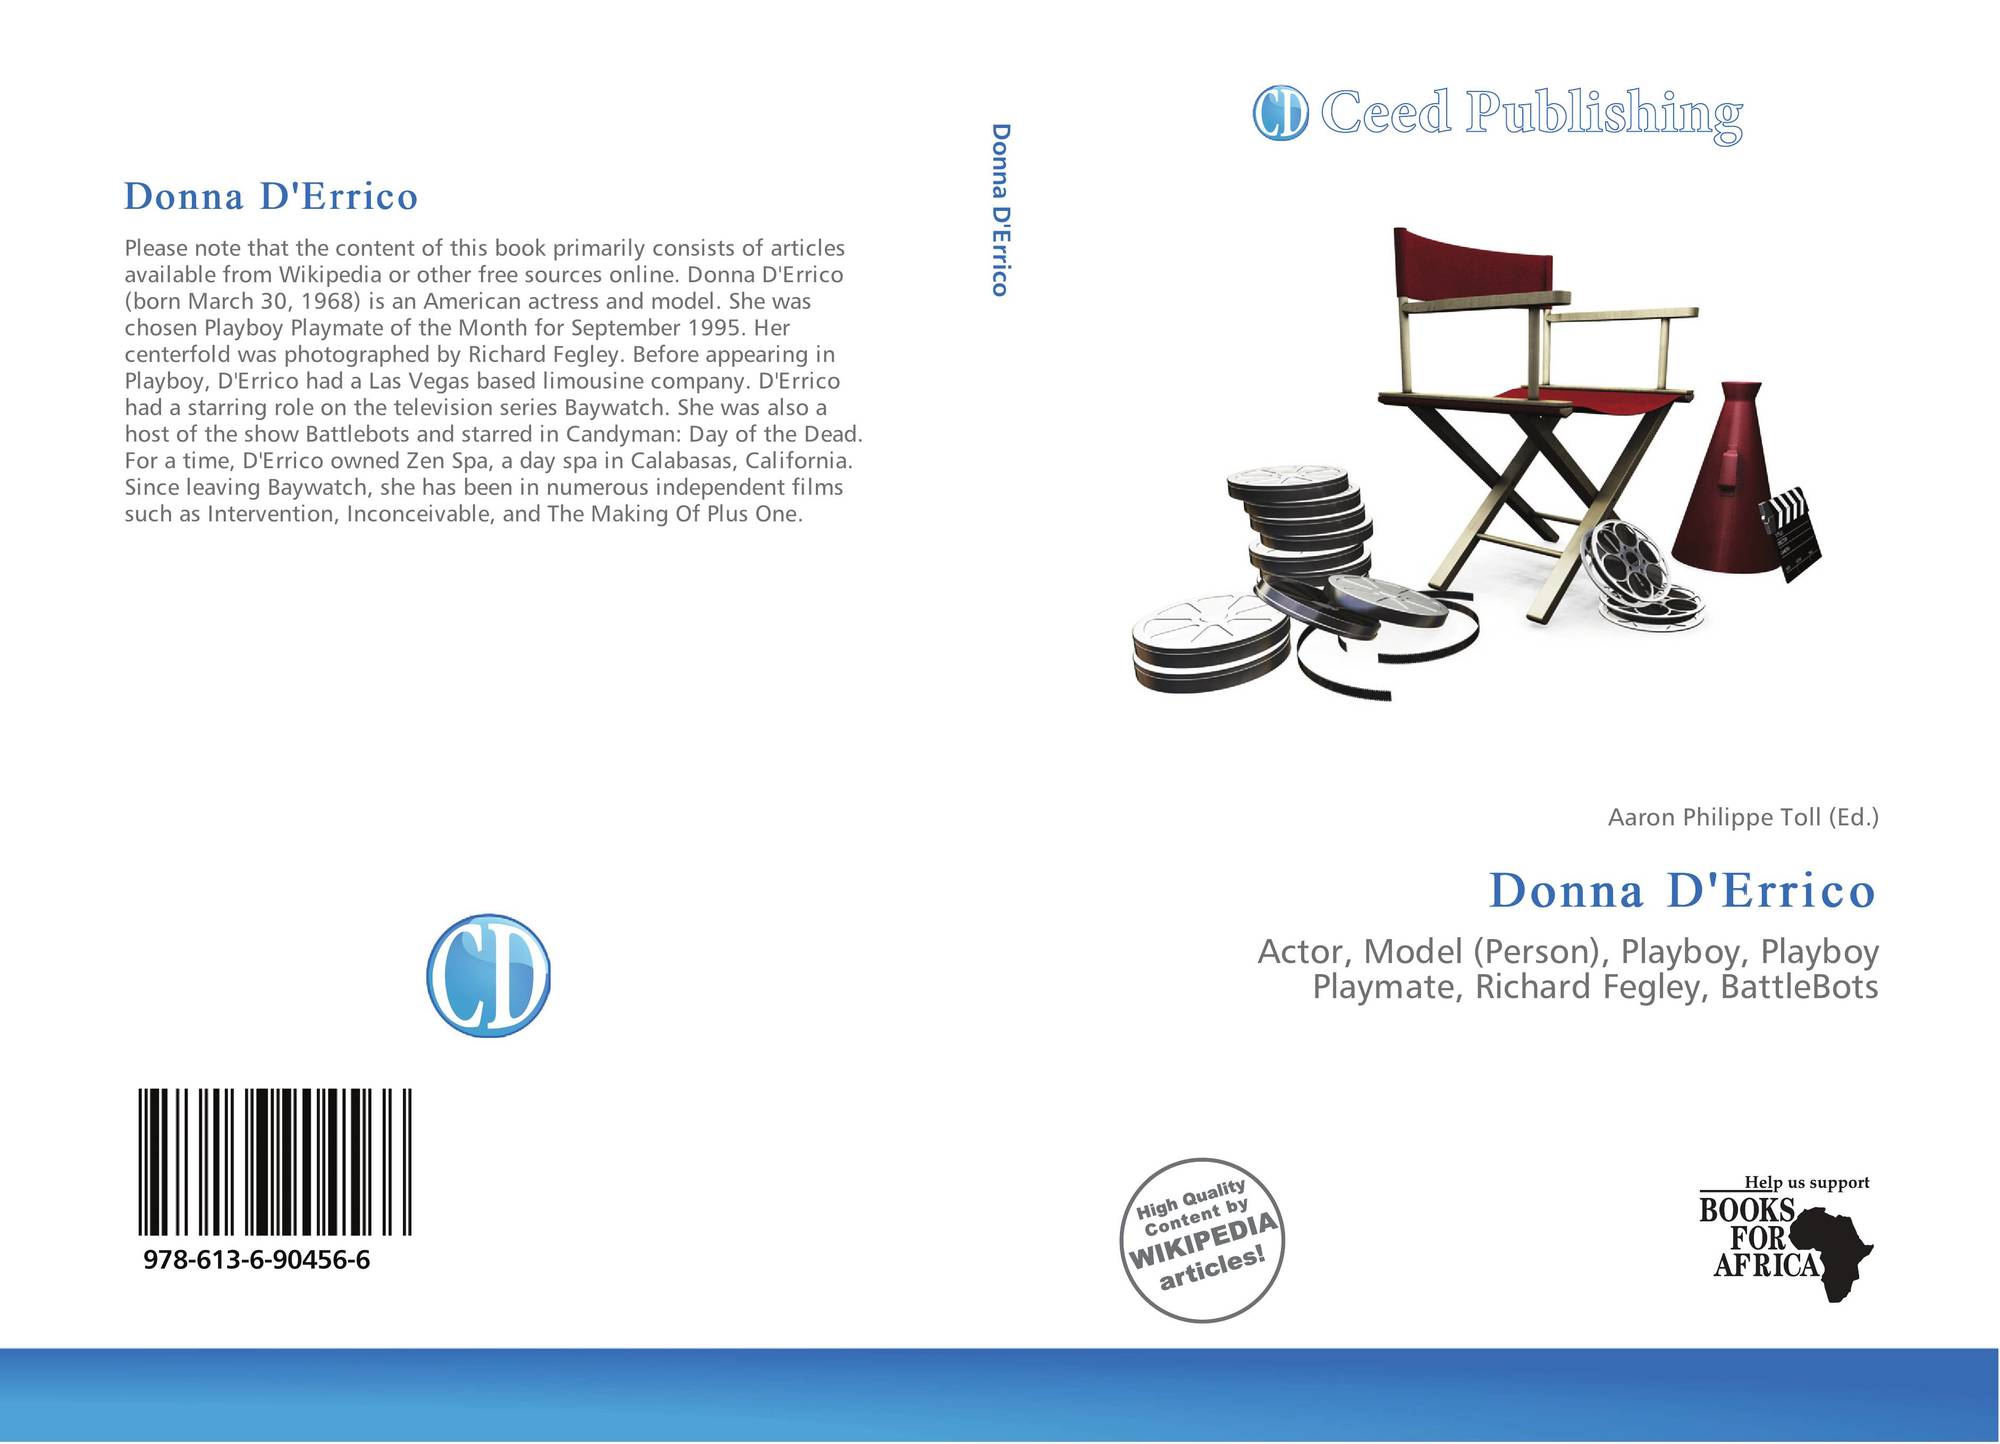 Donna derrico book